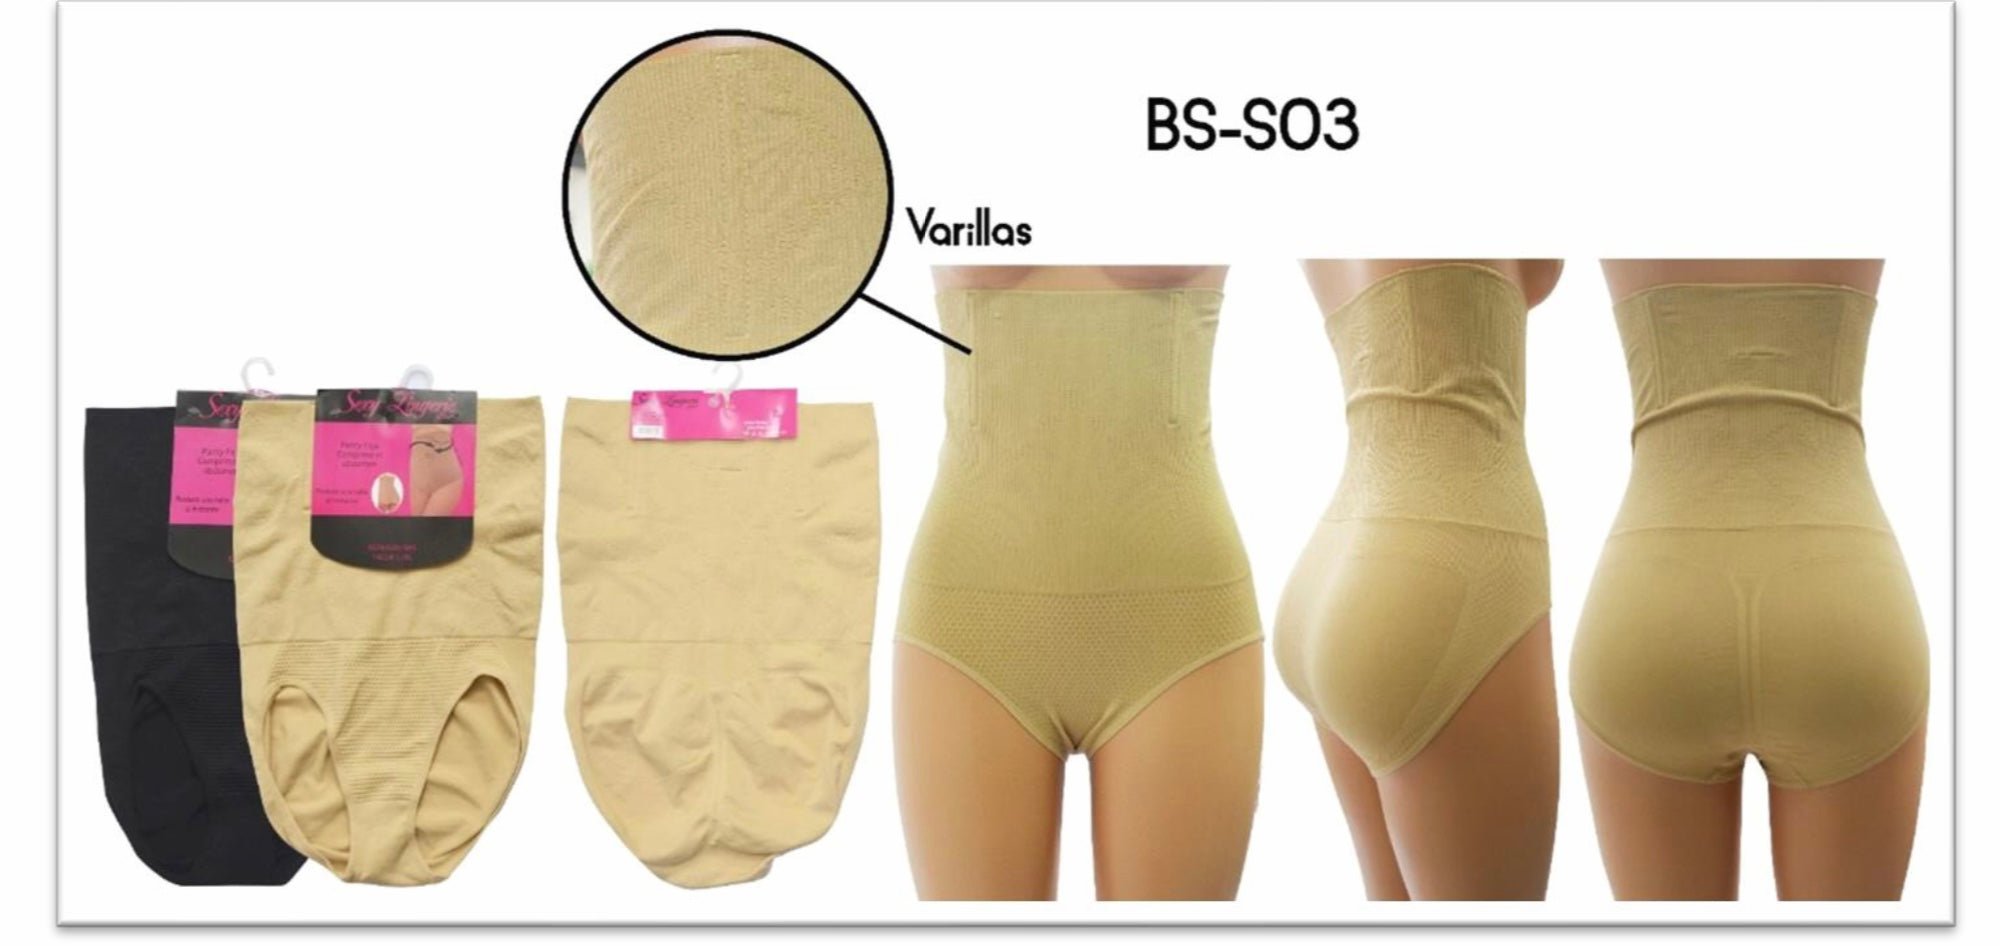 Columbian Reversible Panty Girdle Faja-Smart Compression Shape Contouring Fabric